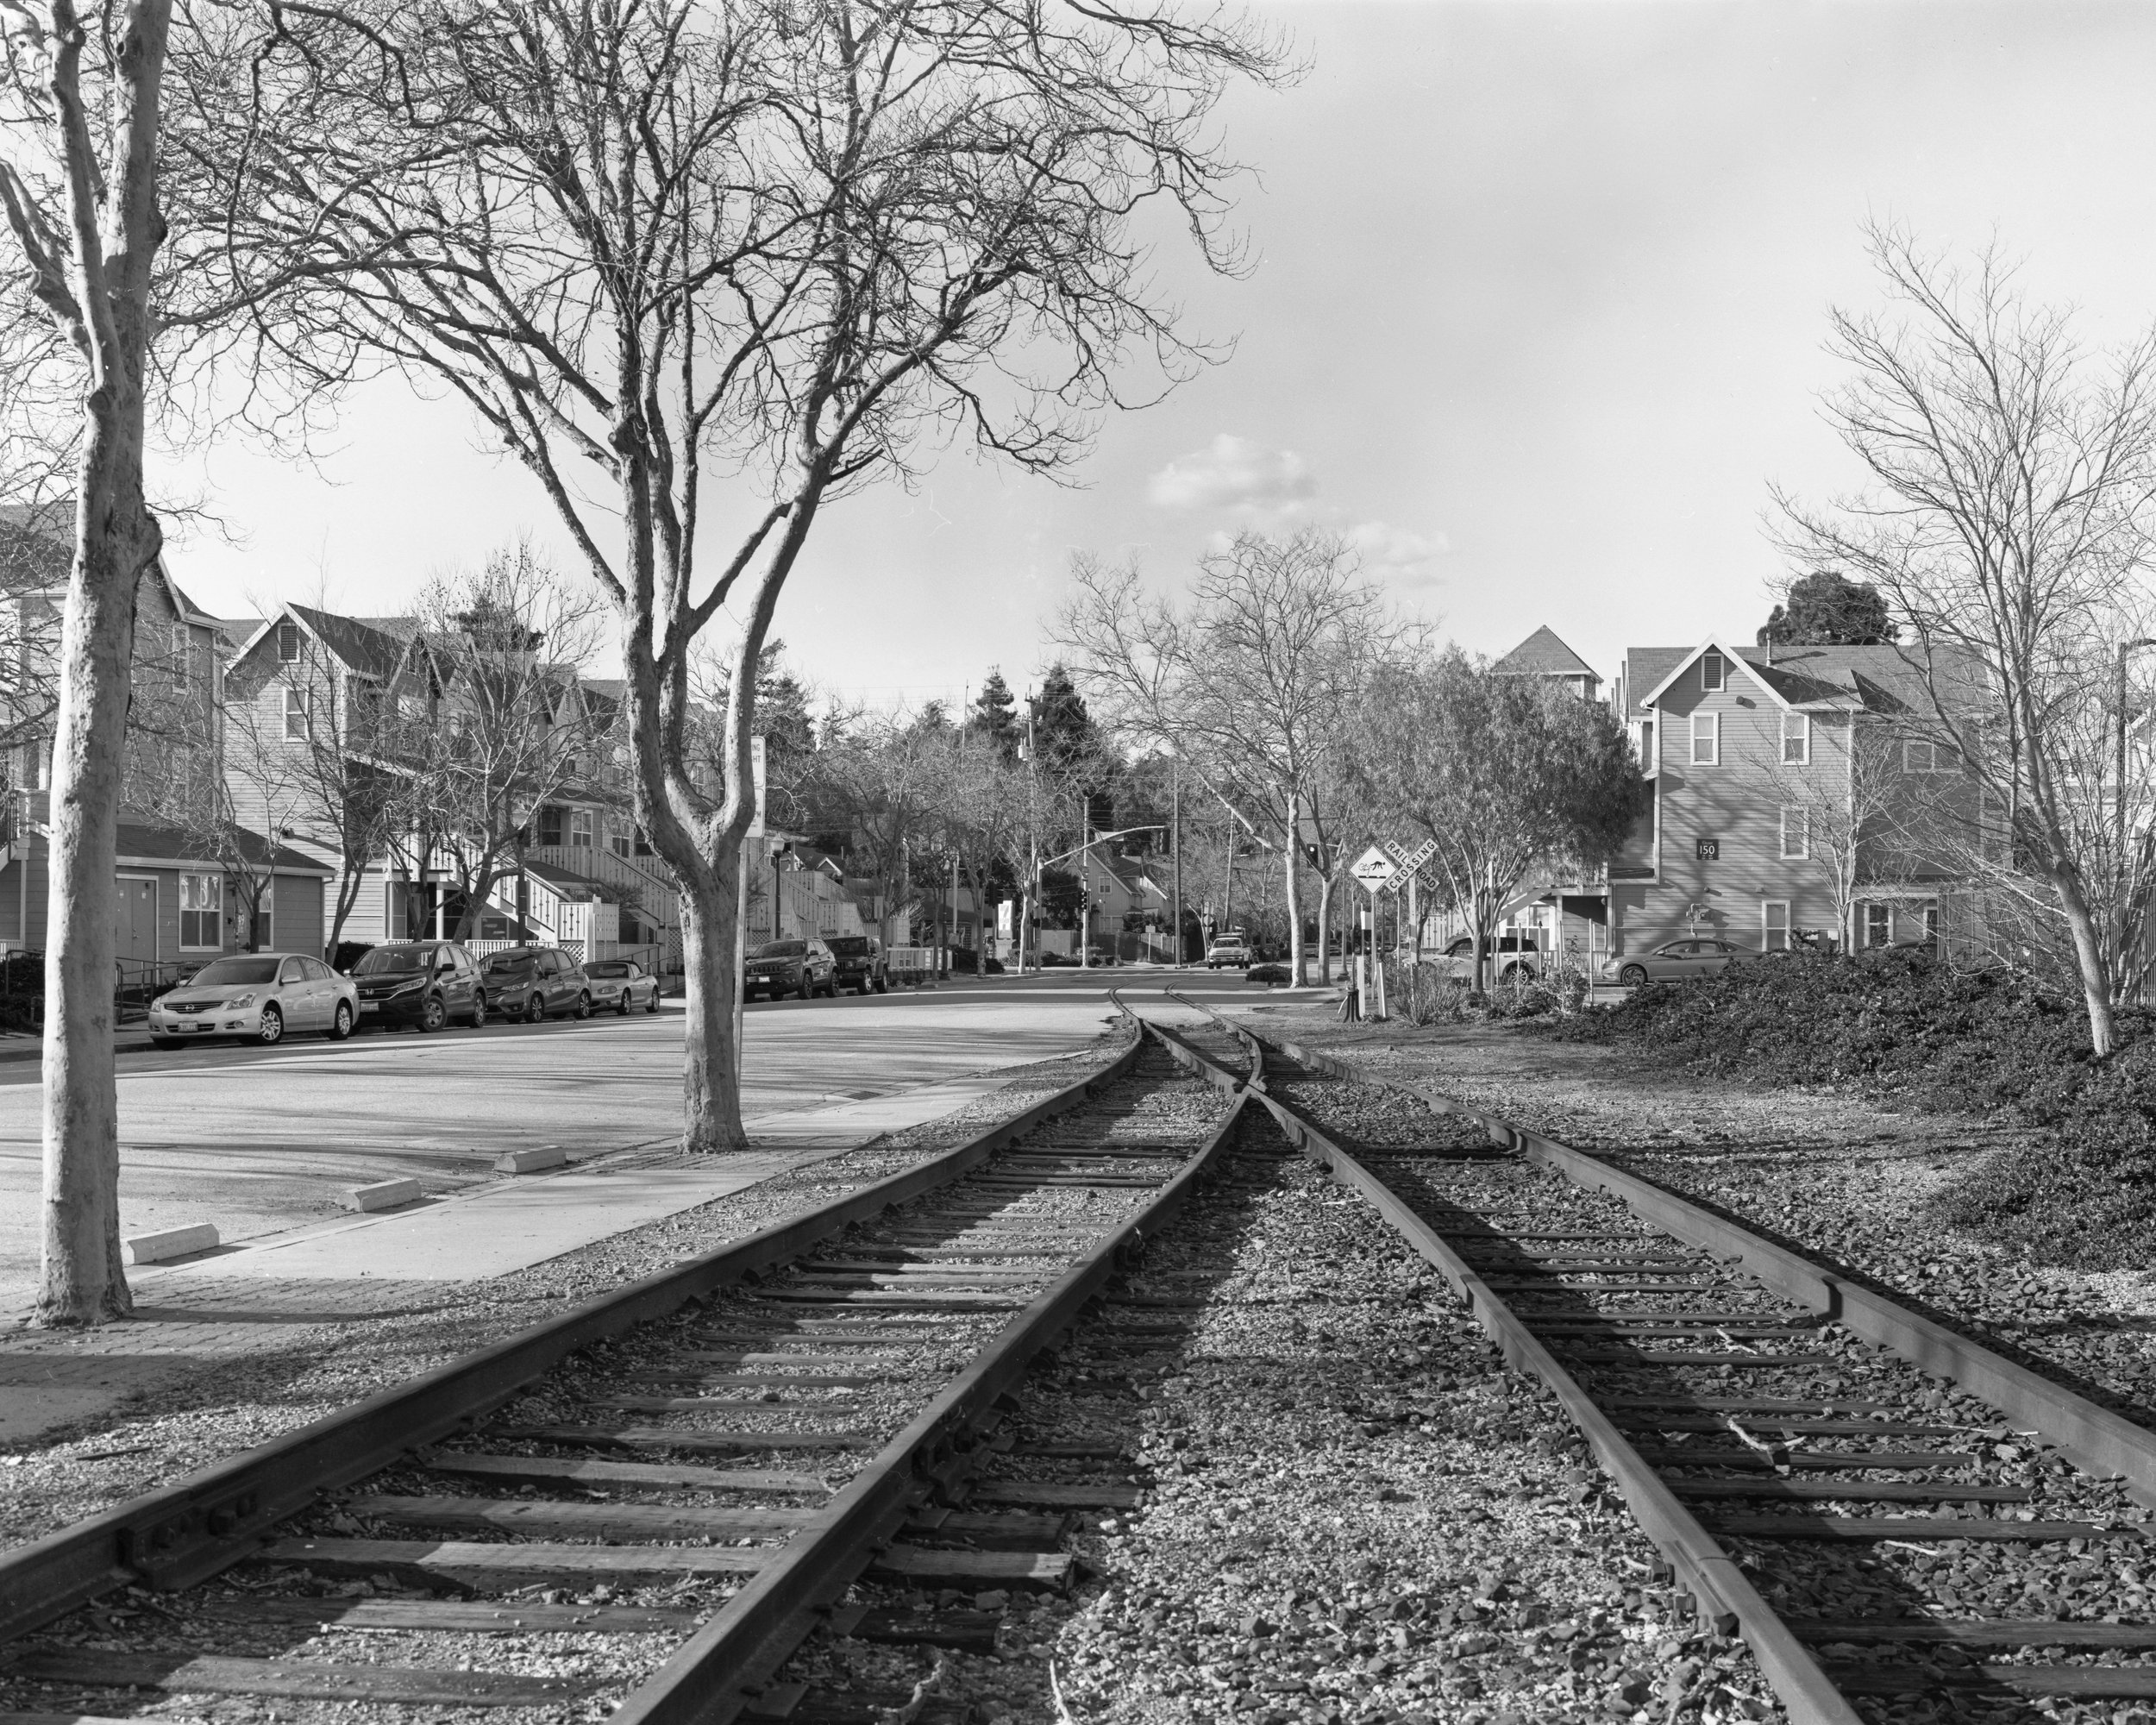  Railroad, Chestnut St, Santa Cruz, 2019 